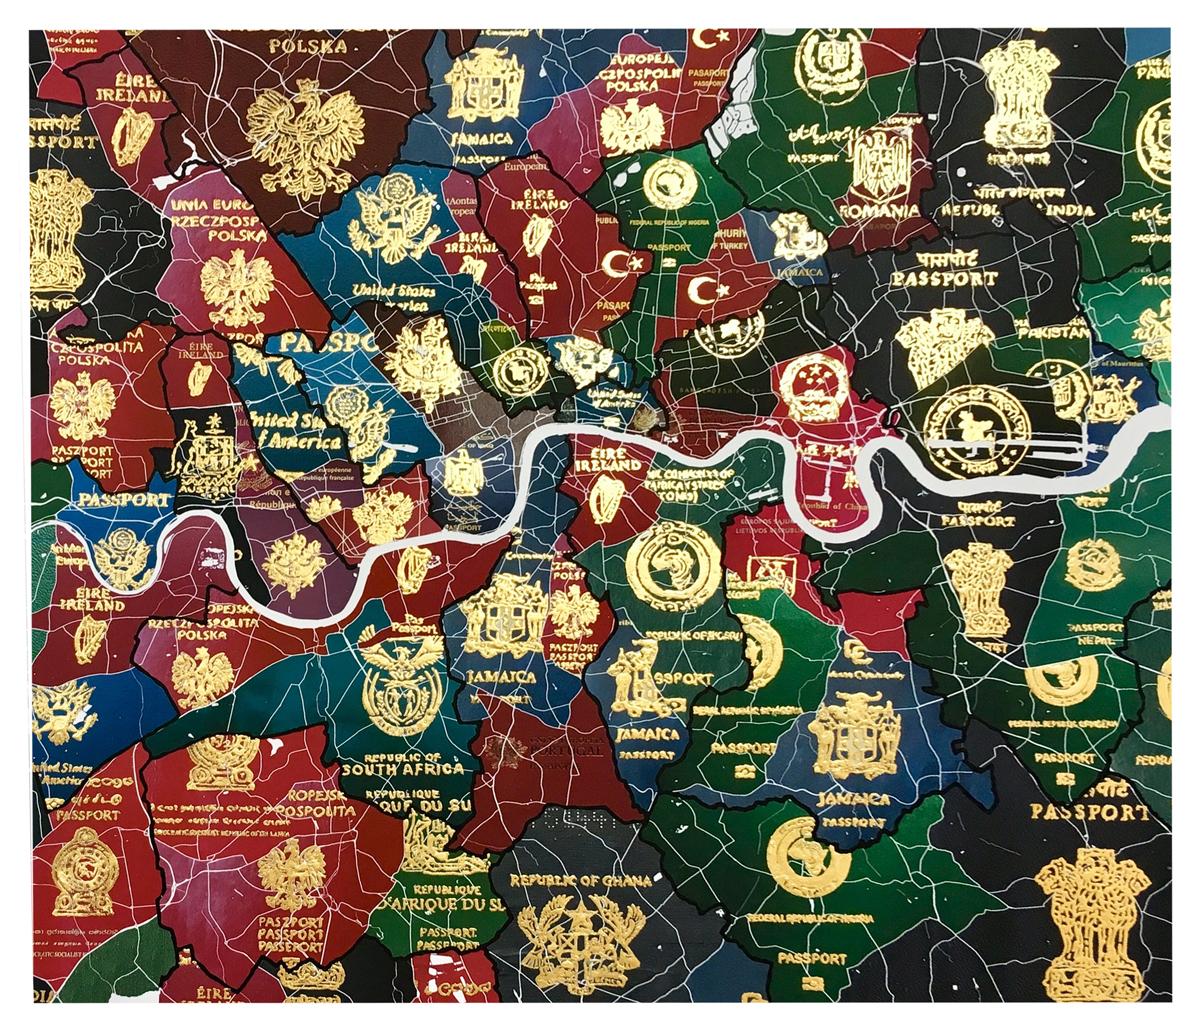 London Passport Map - Limited Edition Silkscreen Print - Mixed Media Art by Yanko Tihov